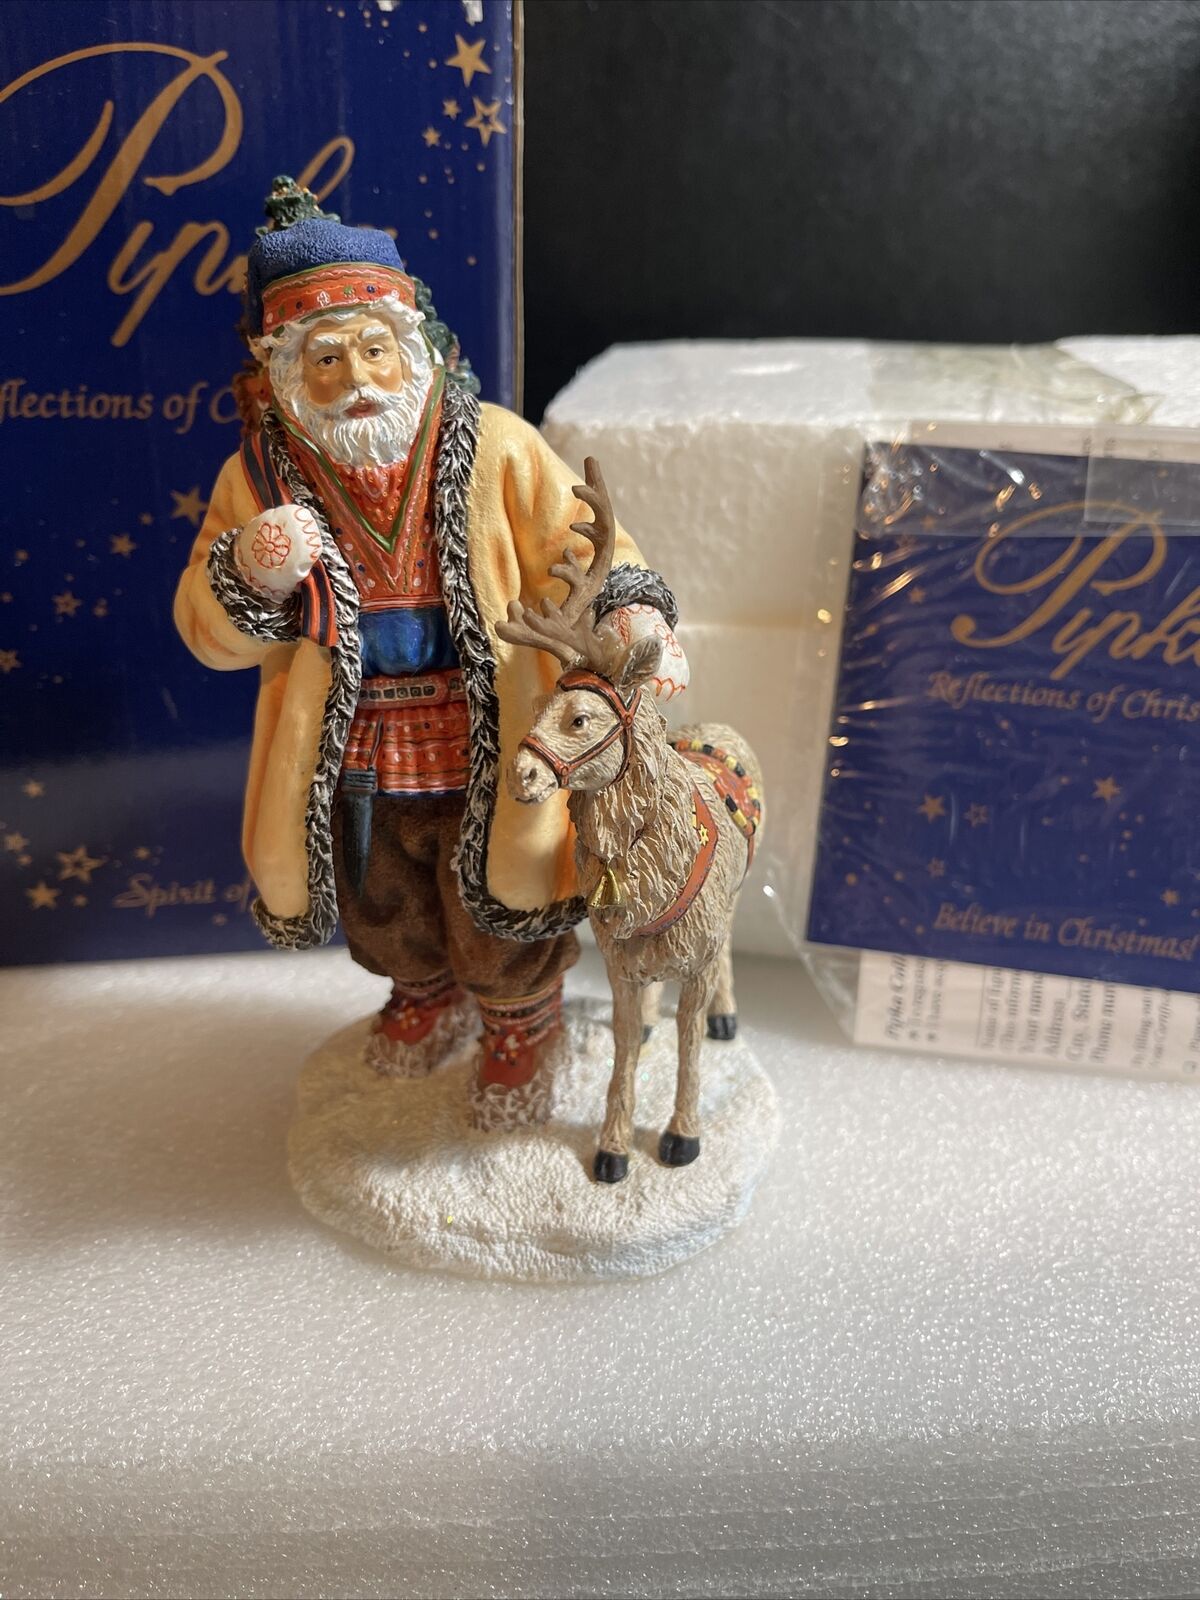 Pipka  “Laplander Santa” w Box & Certificate - 6” - 2001 Reflections Christmas ￼